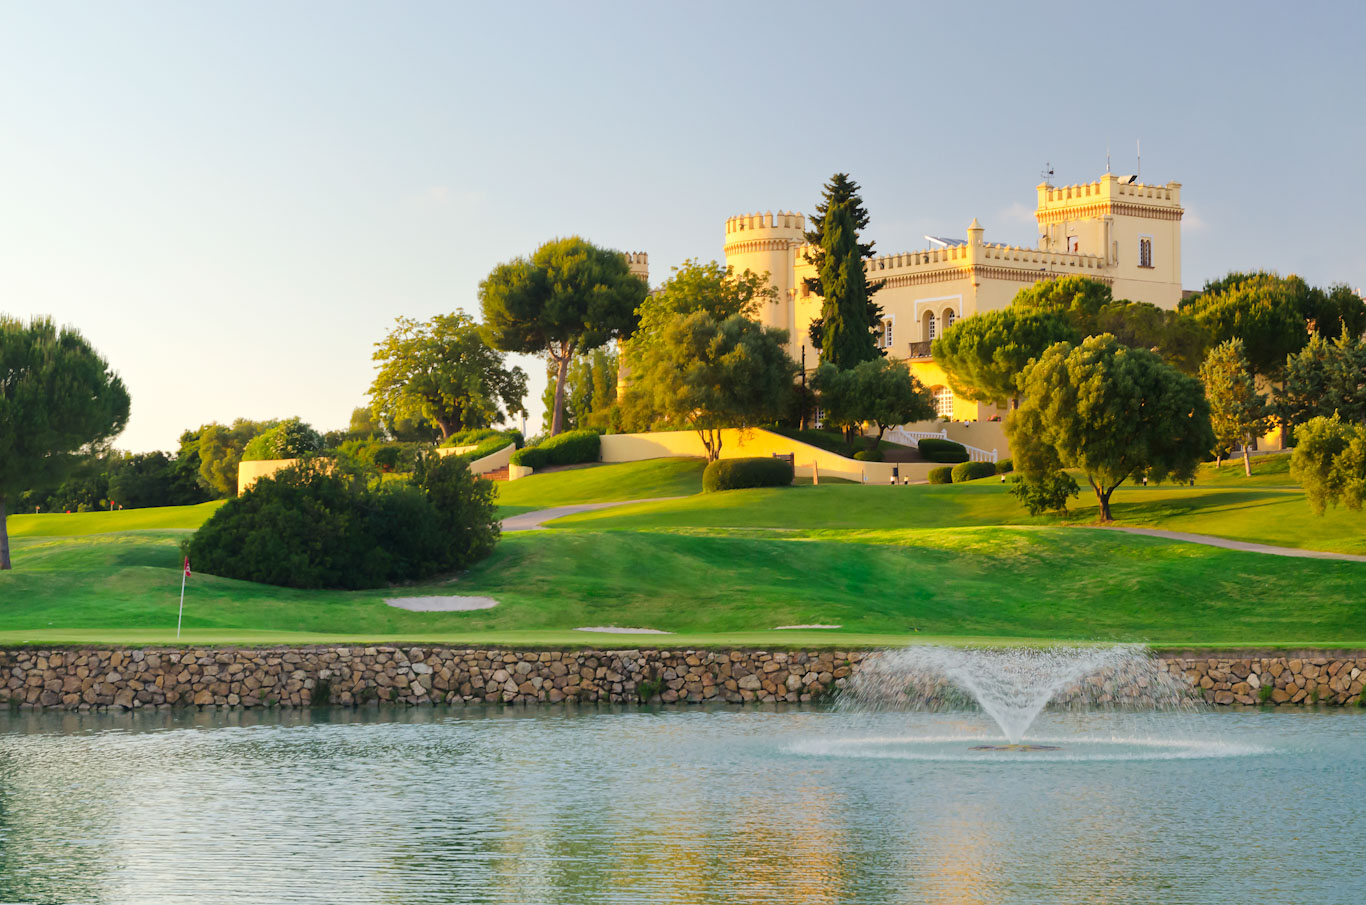 The 18th green at Montecastillo Golf course, Jerez, Spain